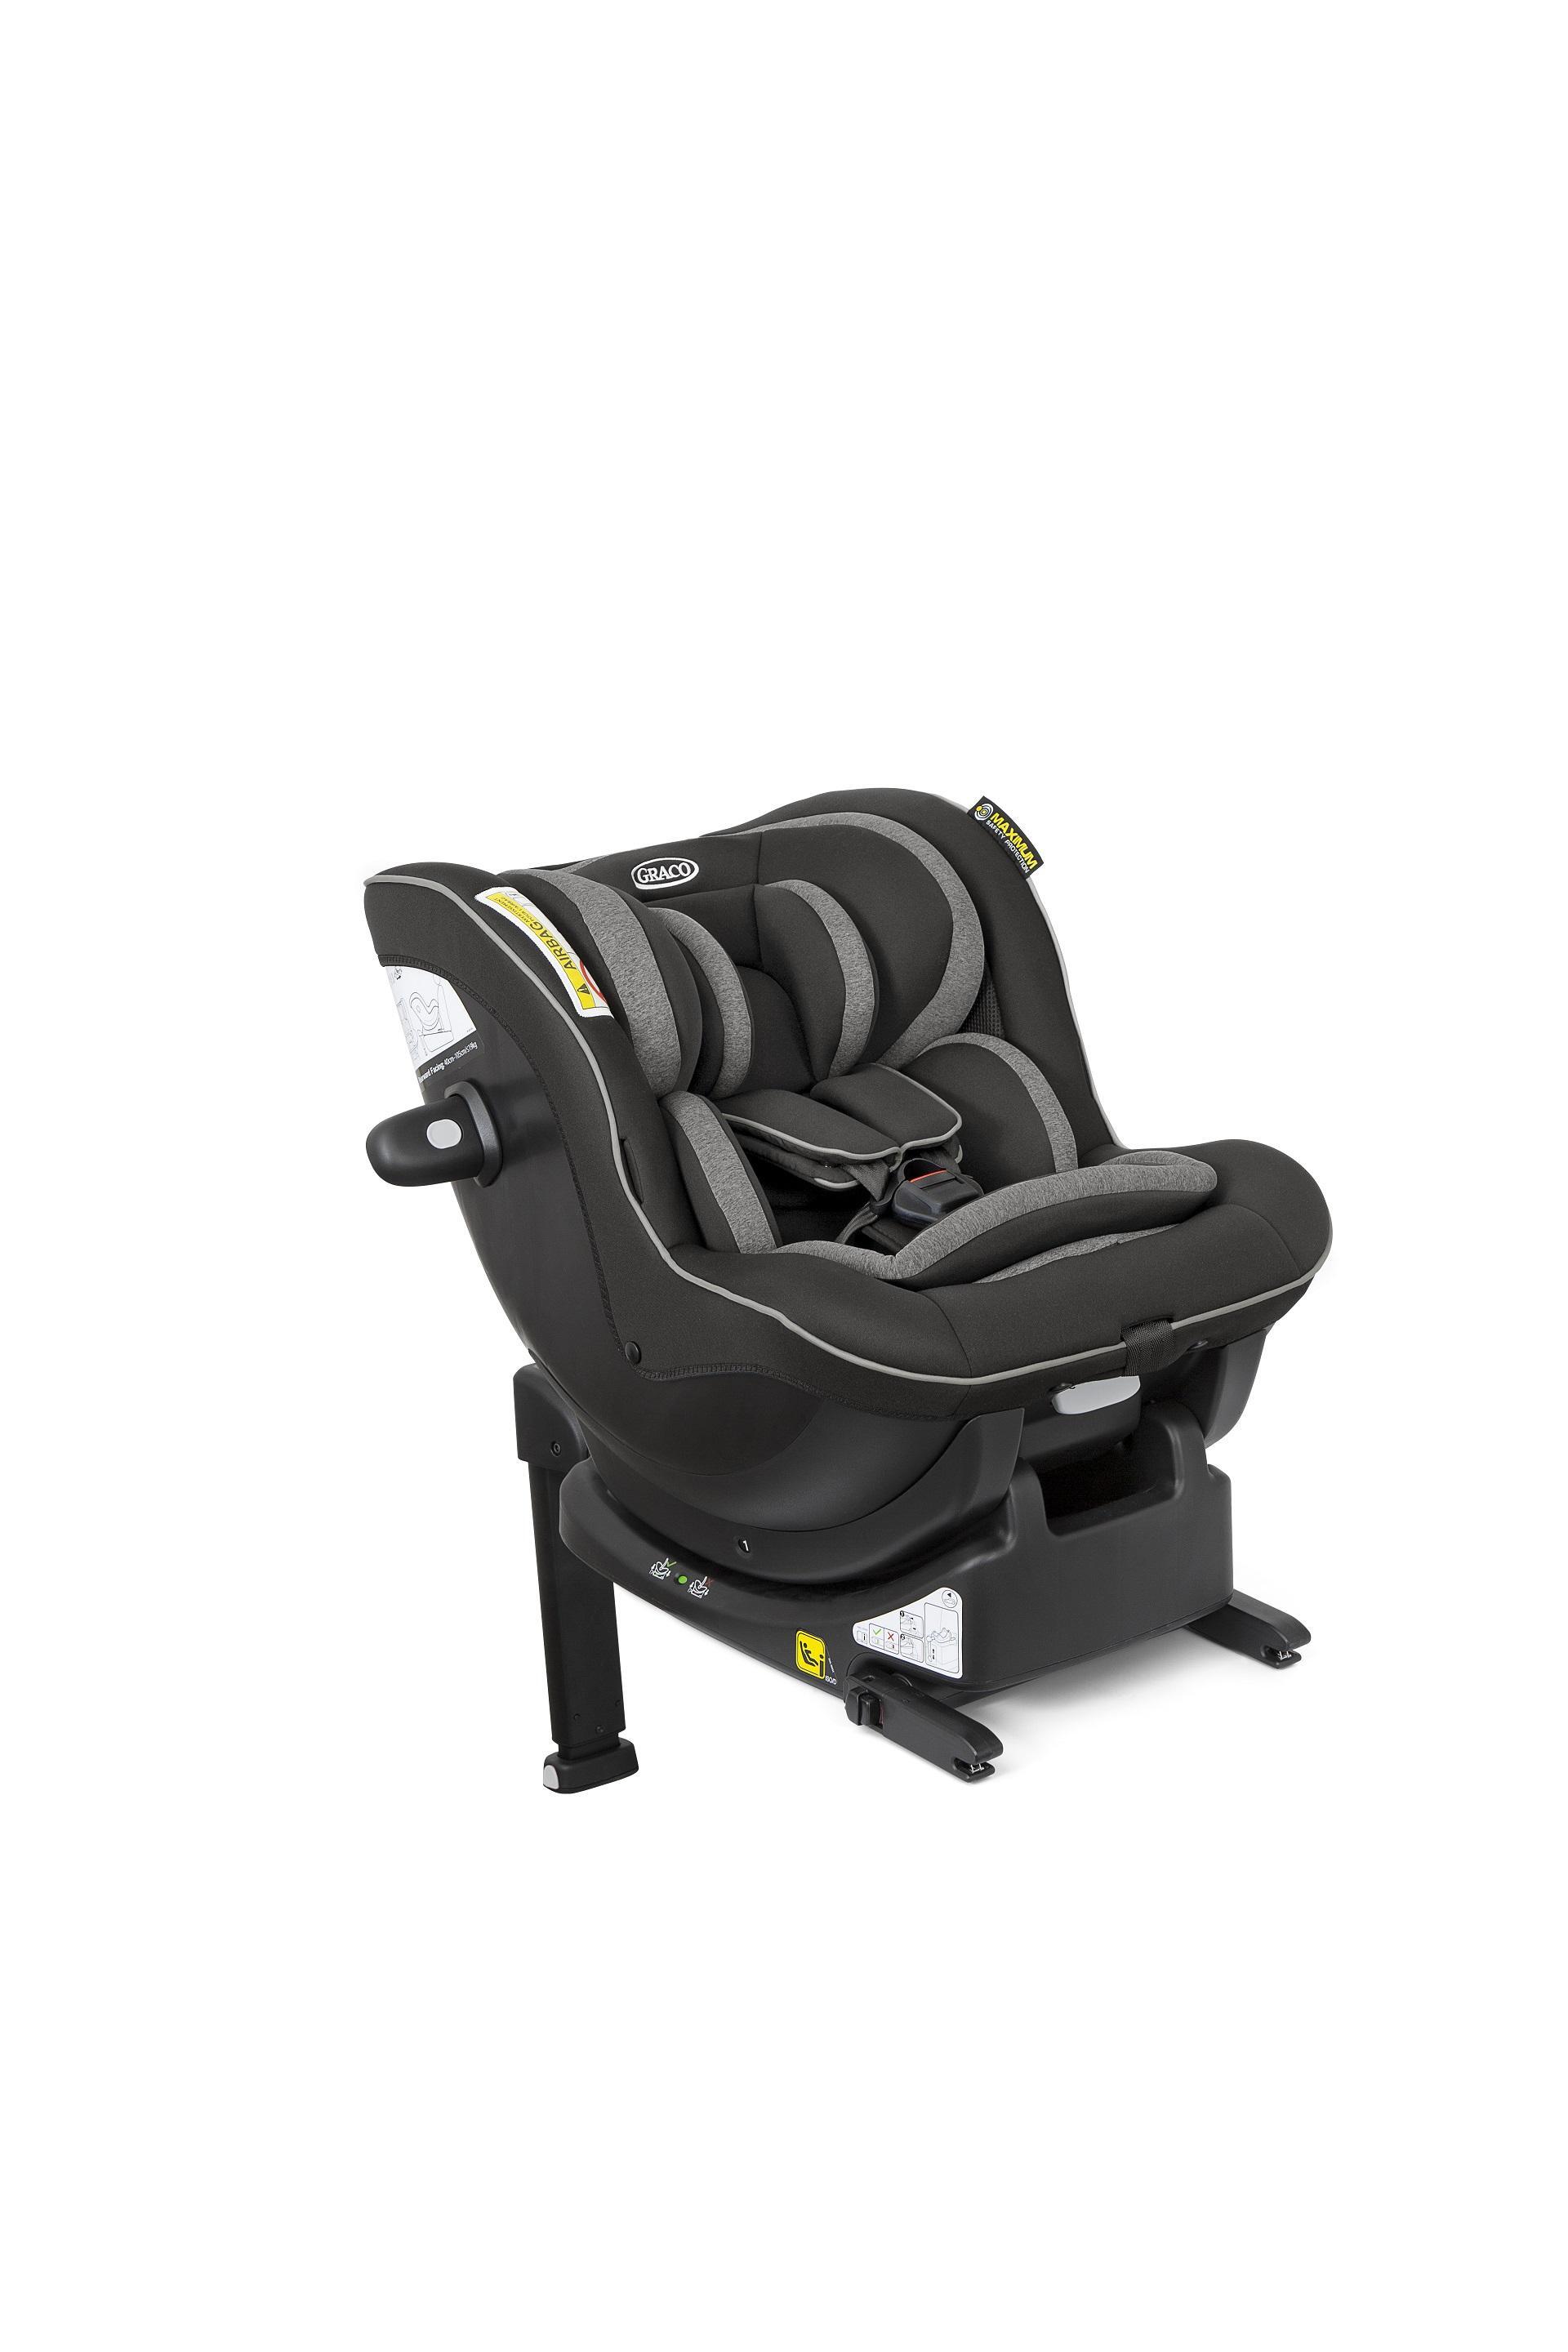 Graco autokrēsls Ascent (40-105cm) Black + ISOFIX bāze - Graco